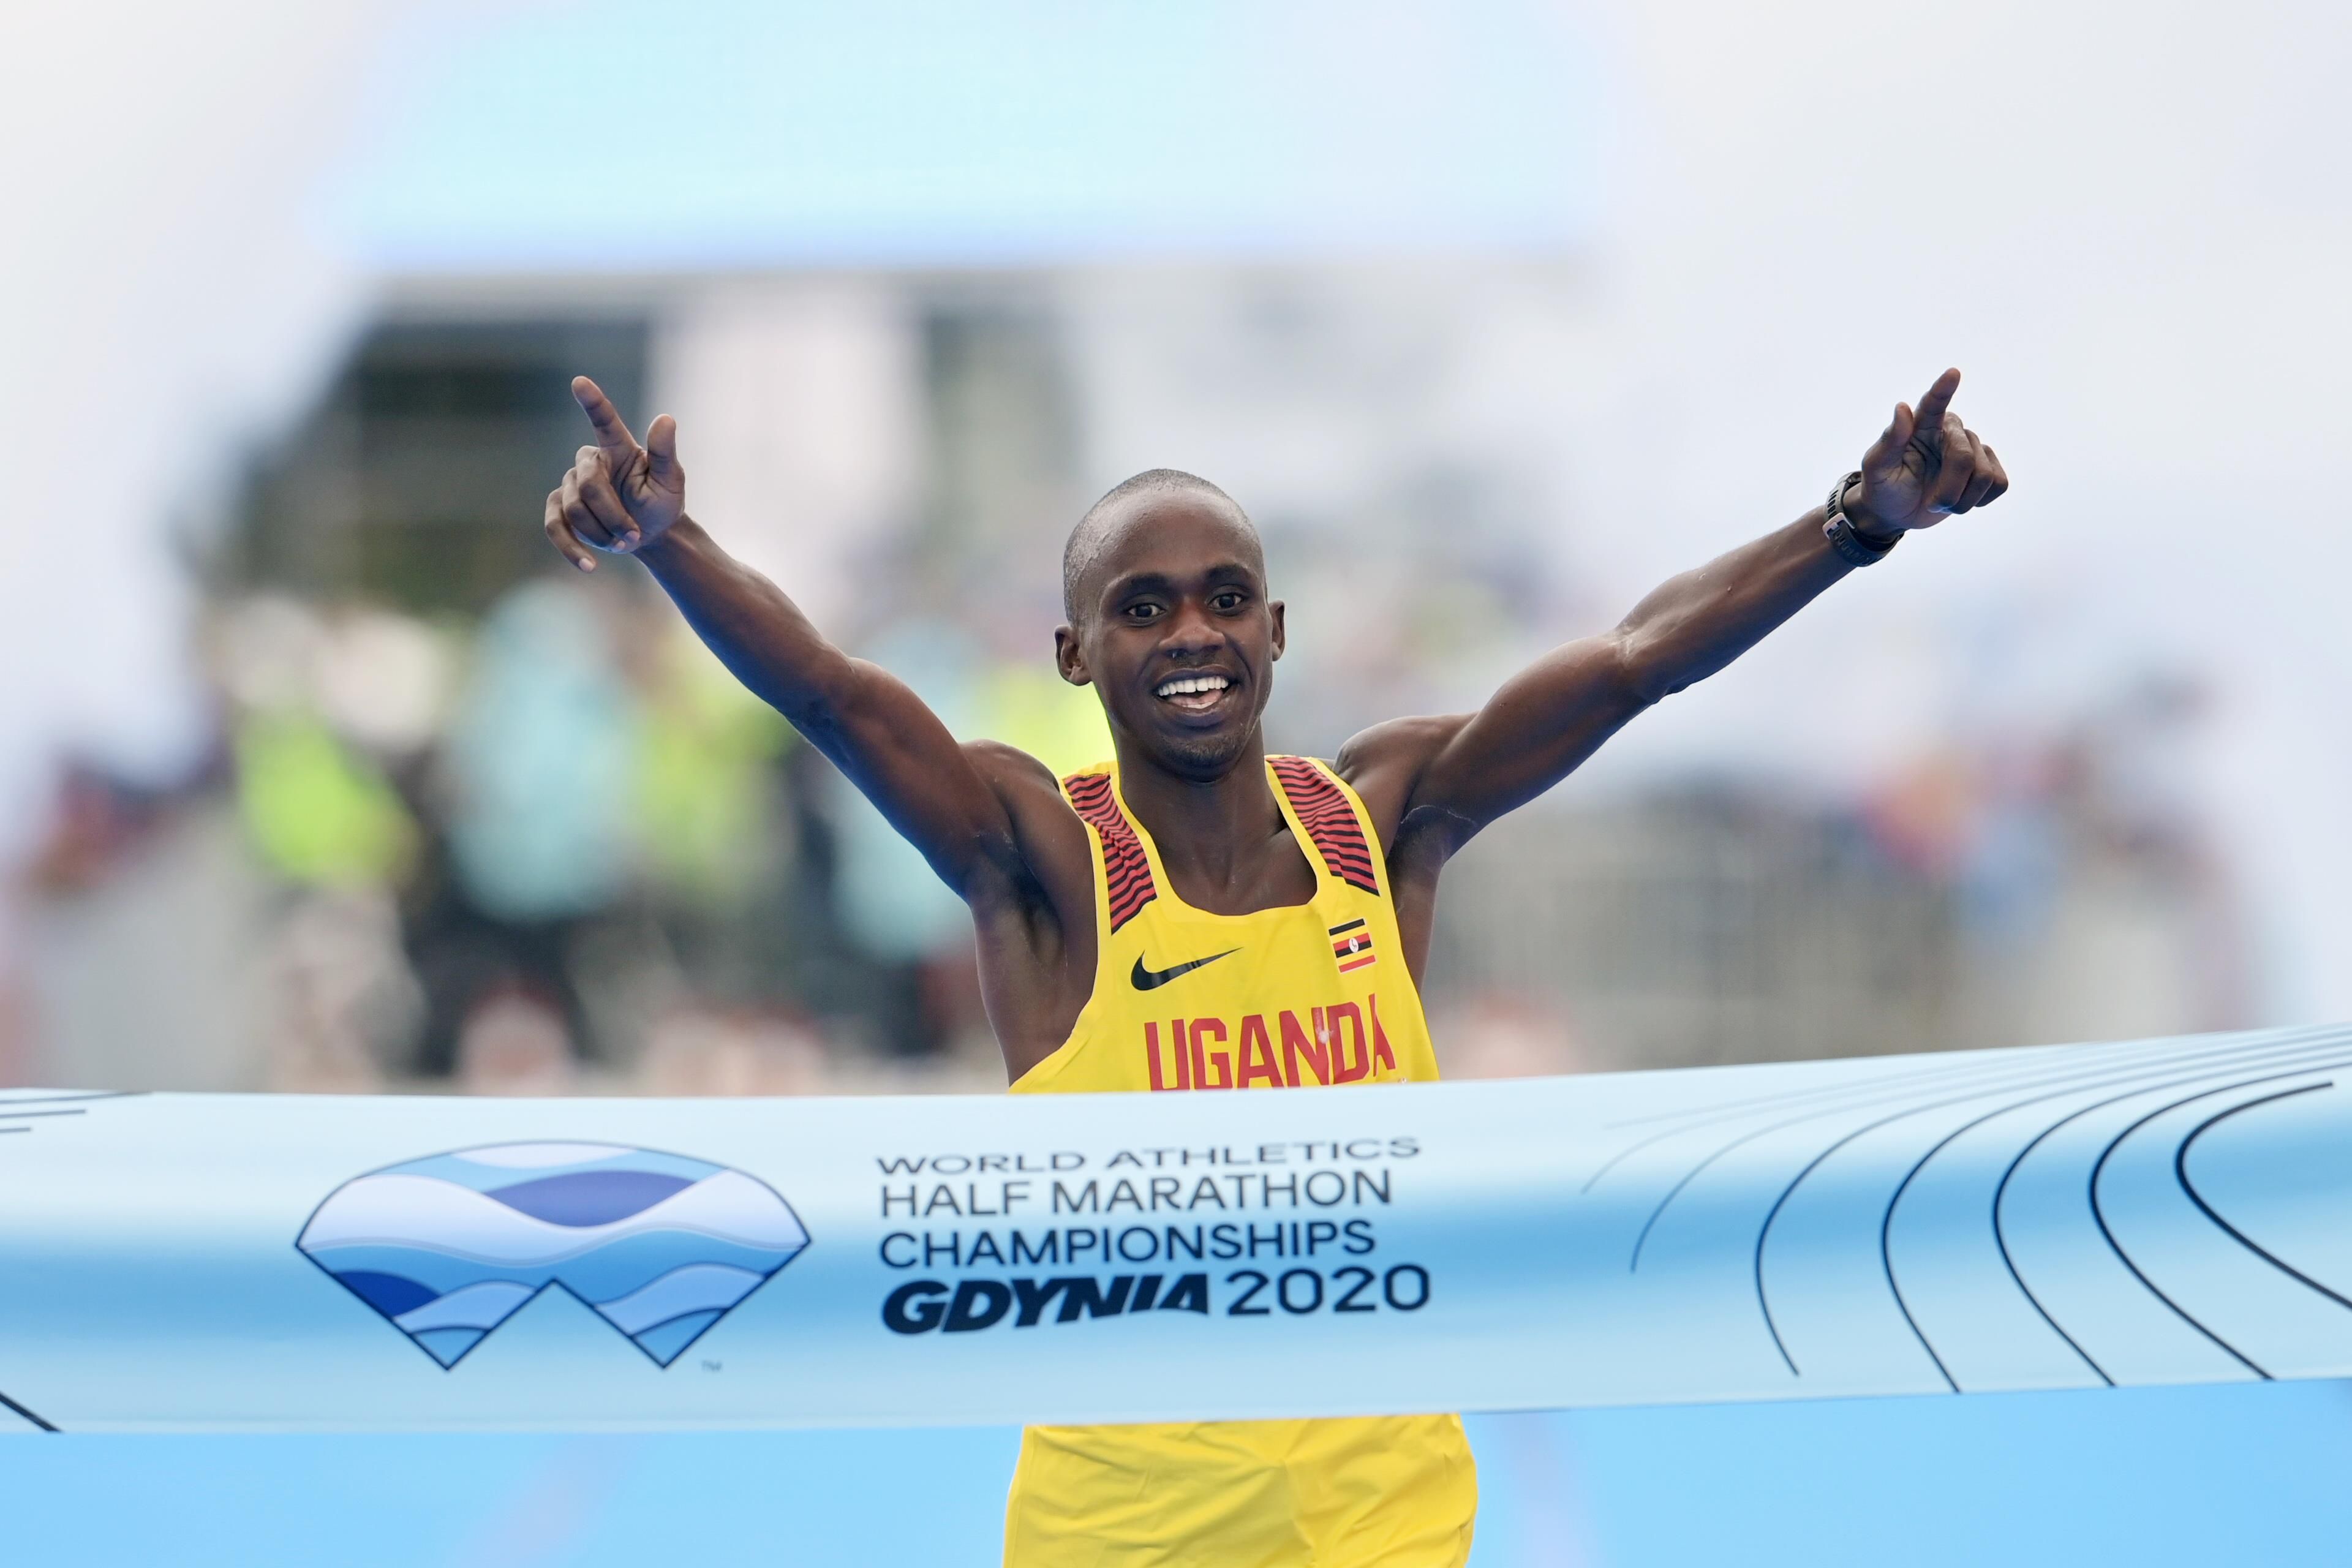 Jacob Kiplimo wins the World Athletics Half Marathon Championships Gdynia 2020